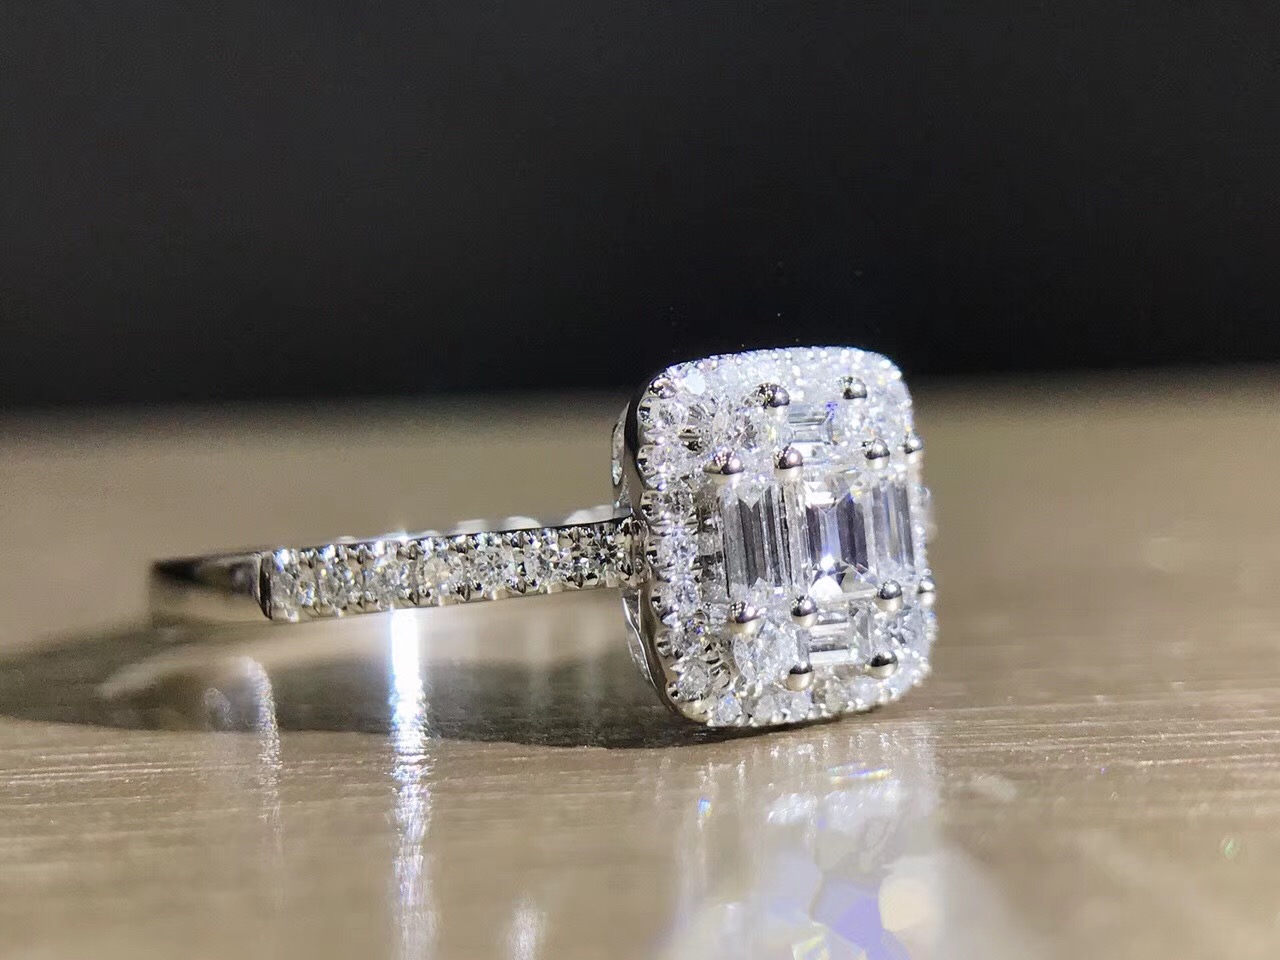 R01440 Engagement Diamond Ring in 18k White Gold